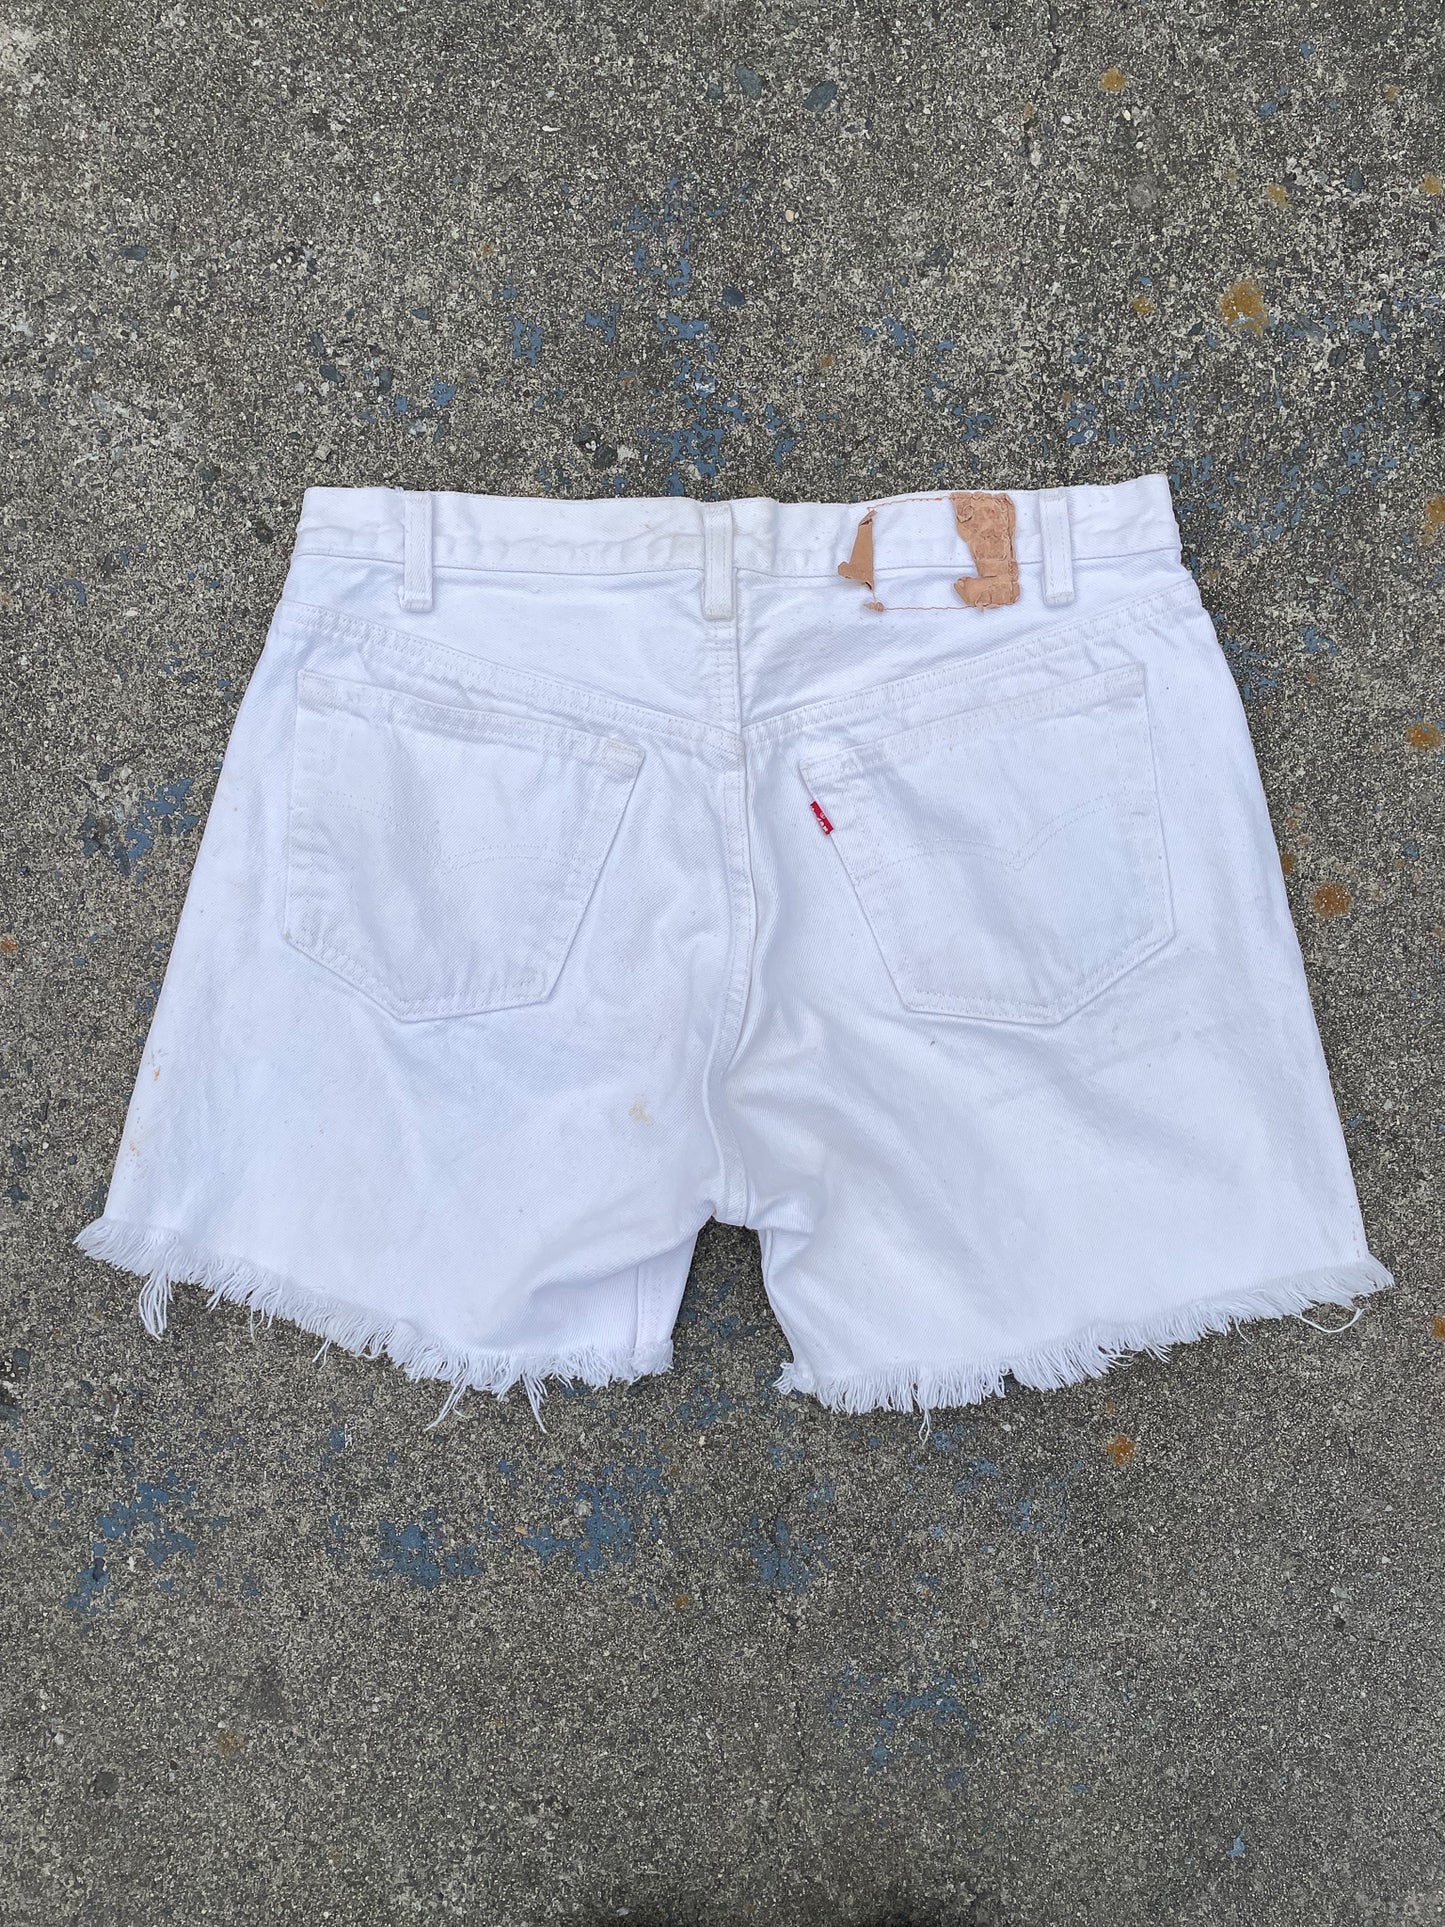 Levi's Cutoff Shorts—[32]